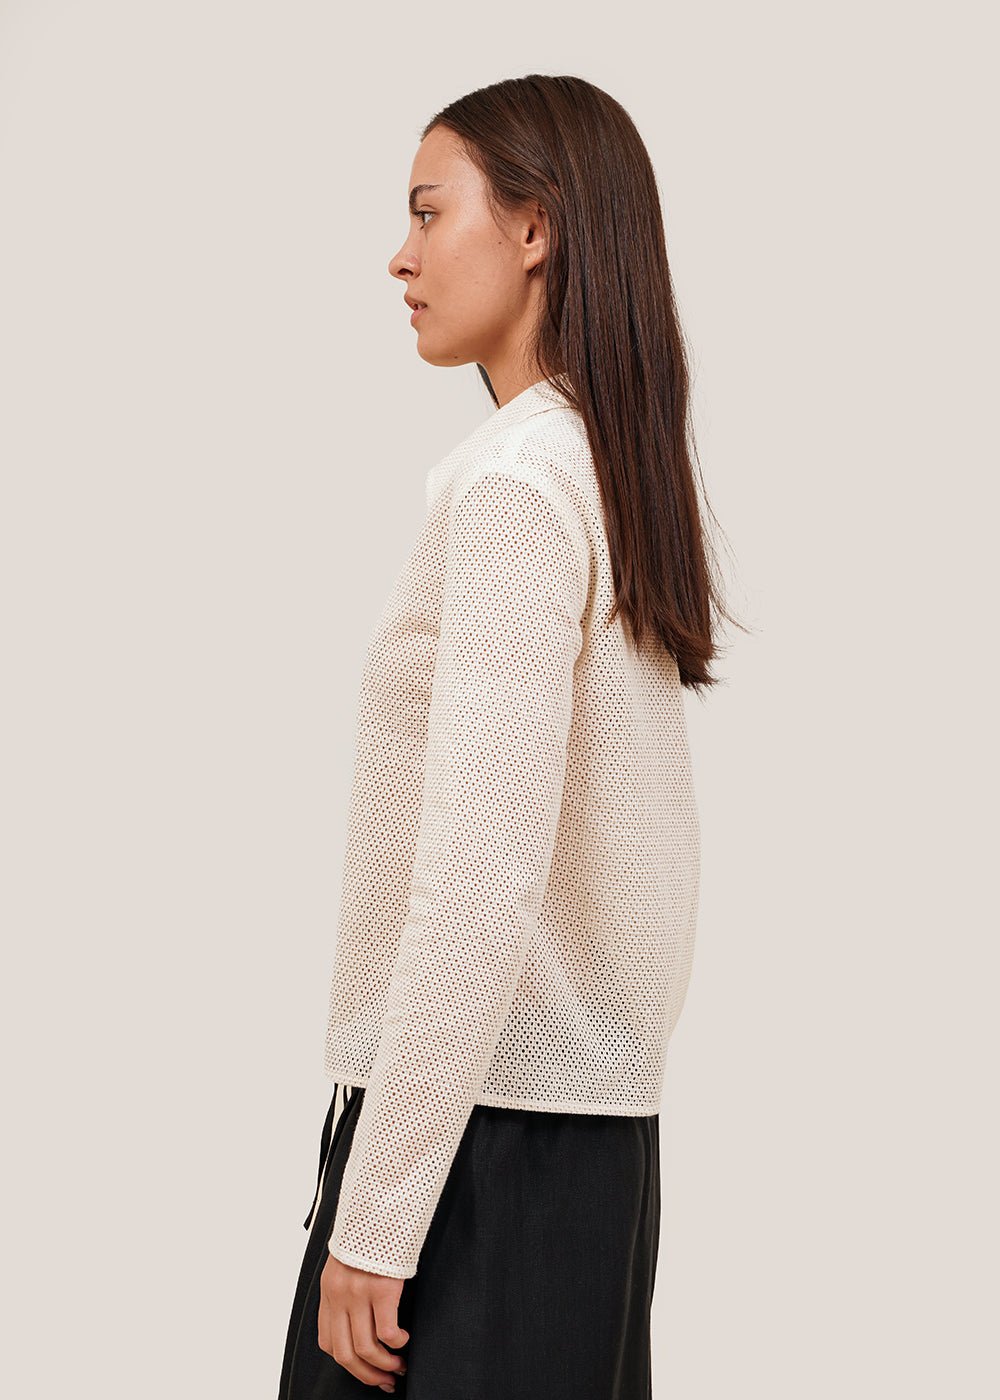 AMOMENTO Ecru Crochet Long-Sleeve Shirt - New Classics Studios Sustainable Ethical Fashion Canada